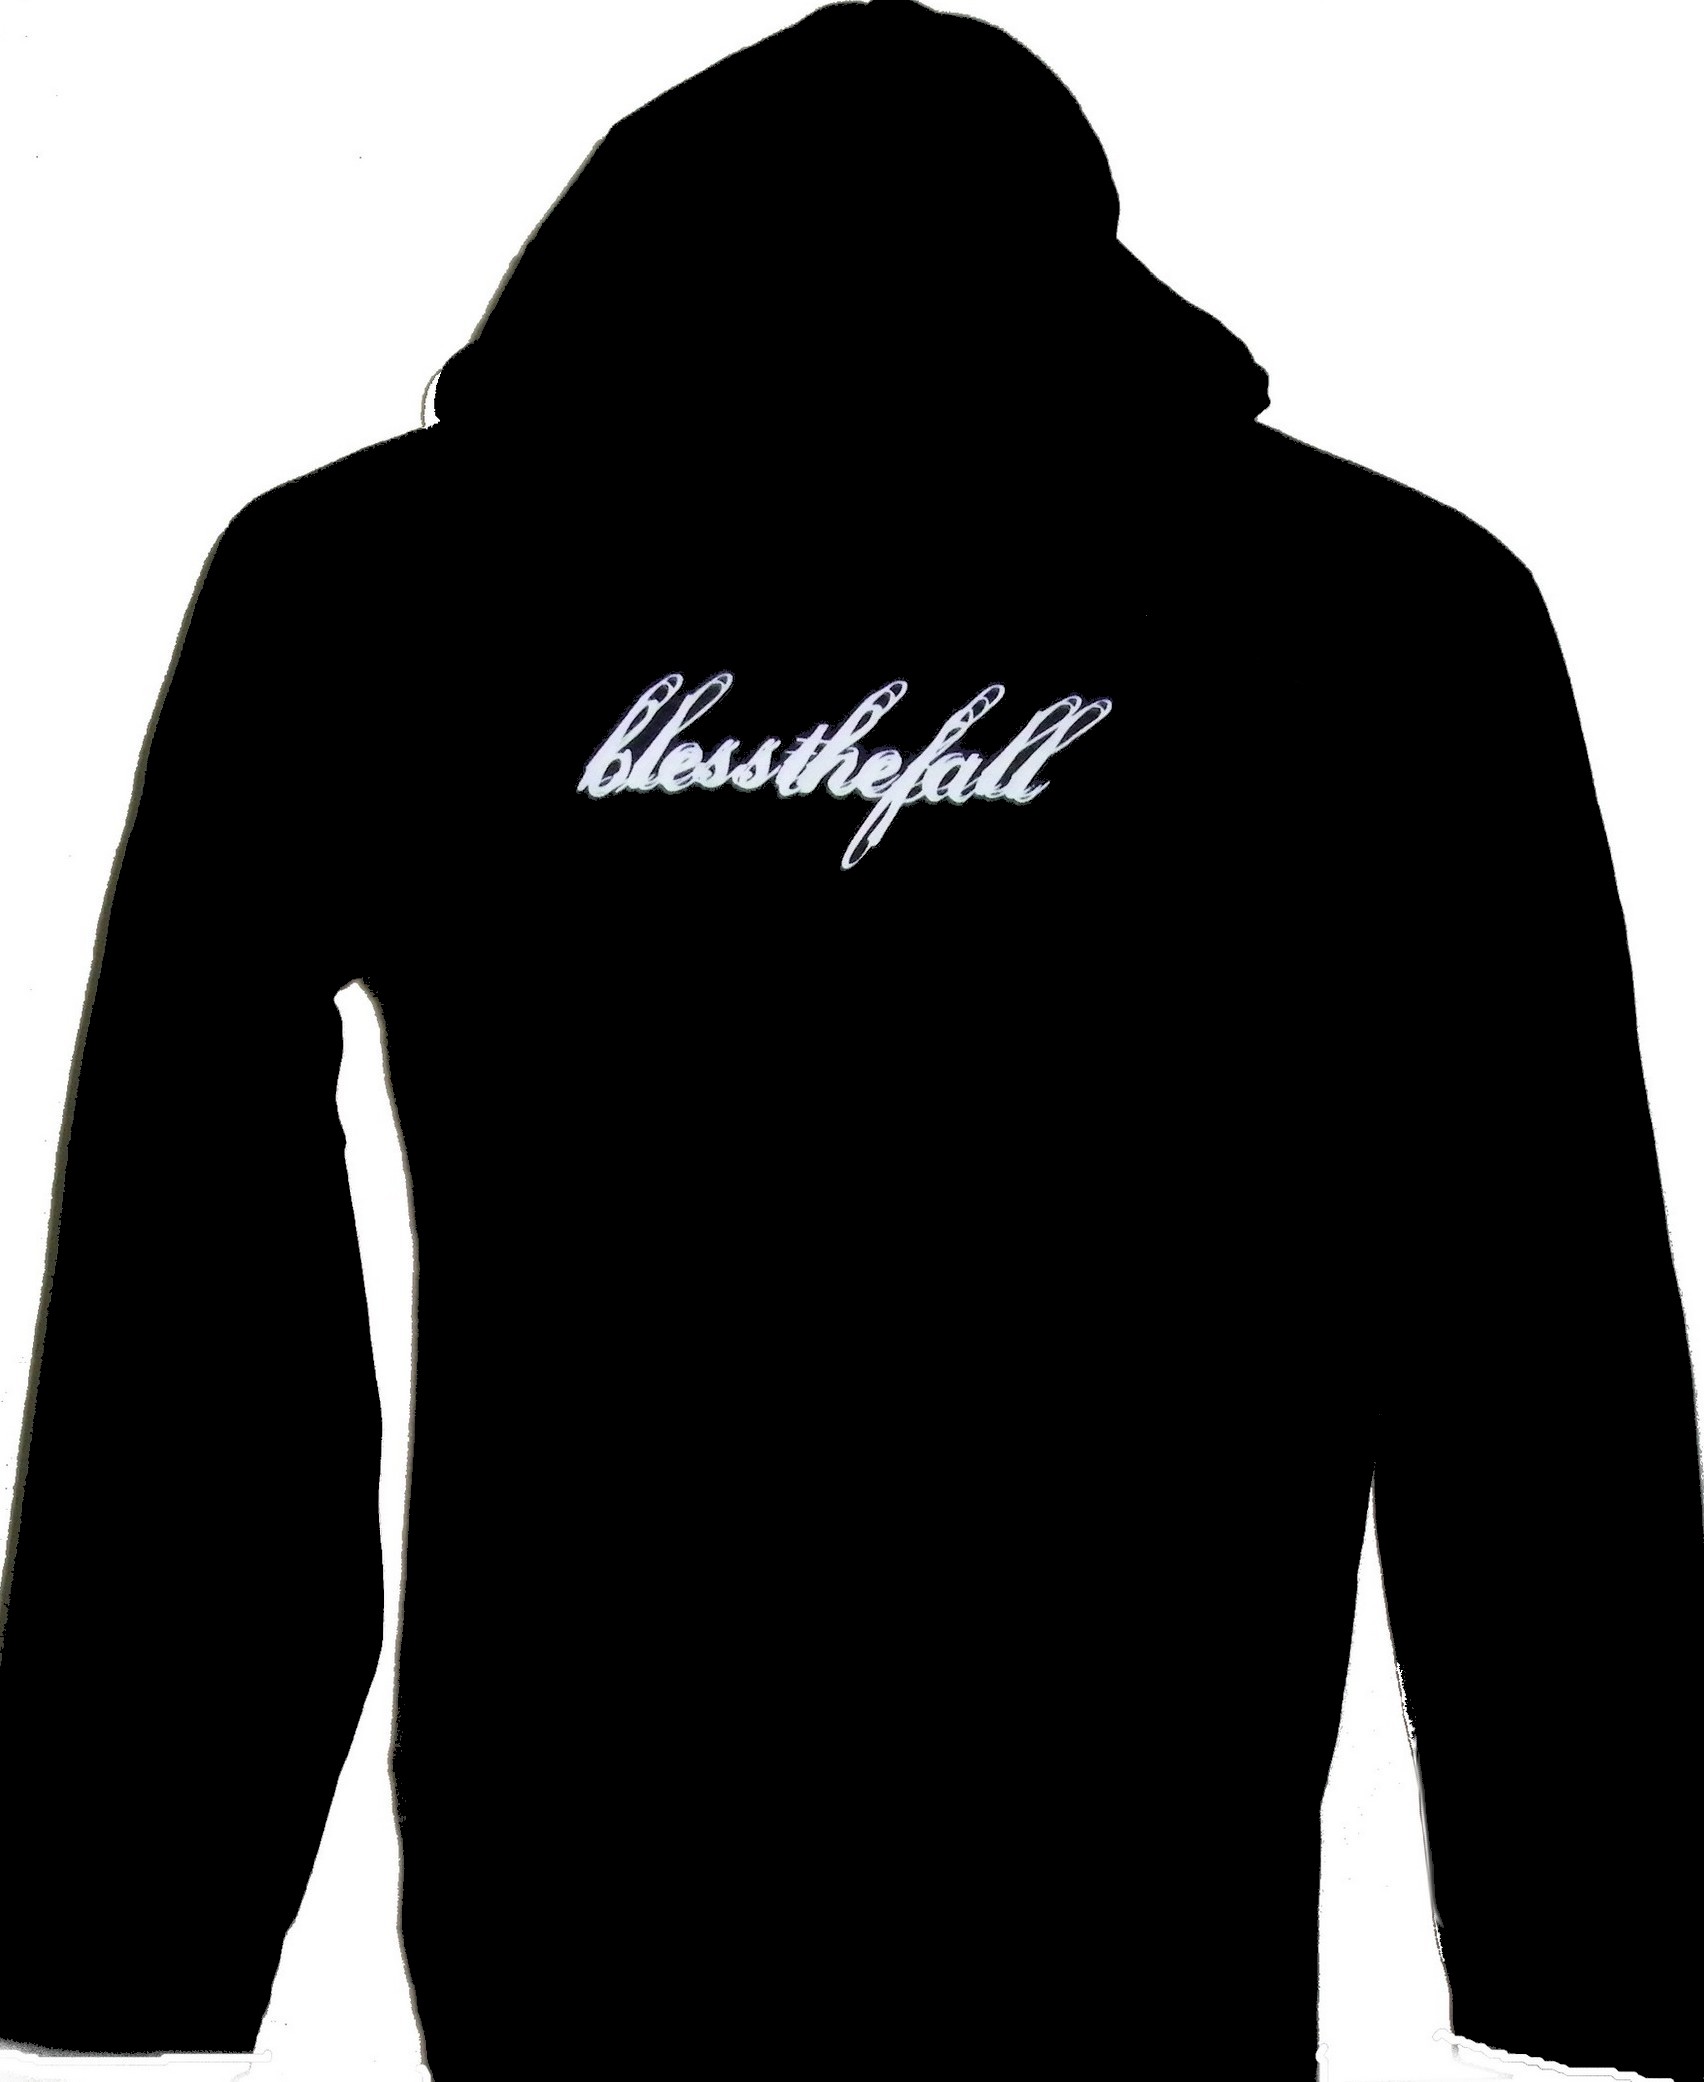 blessthefall long-sleeved t-shirt w/hoodie size L – RoxxBKK